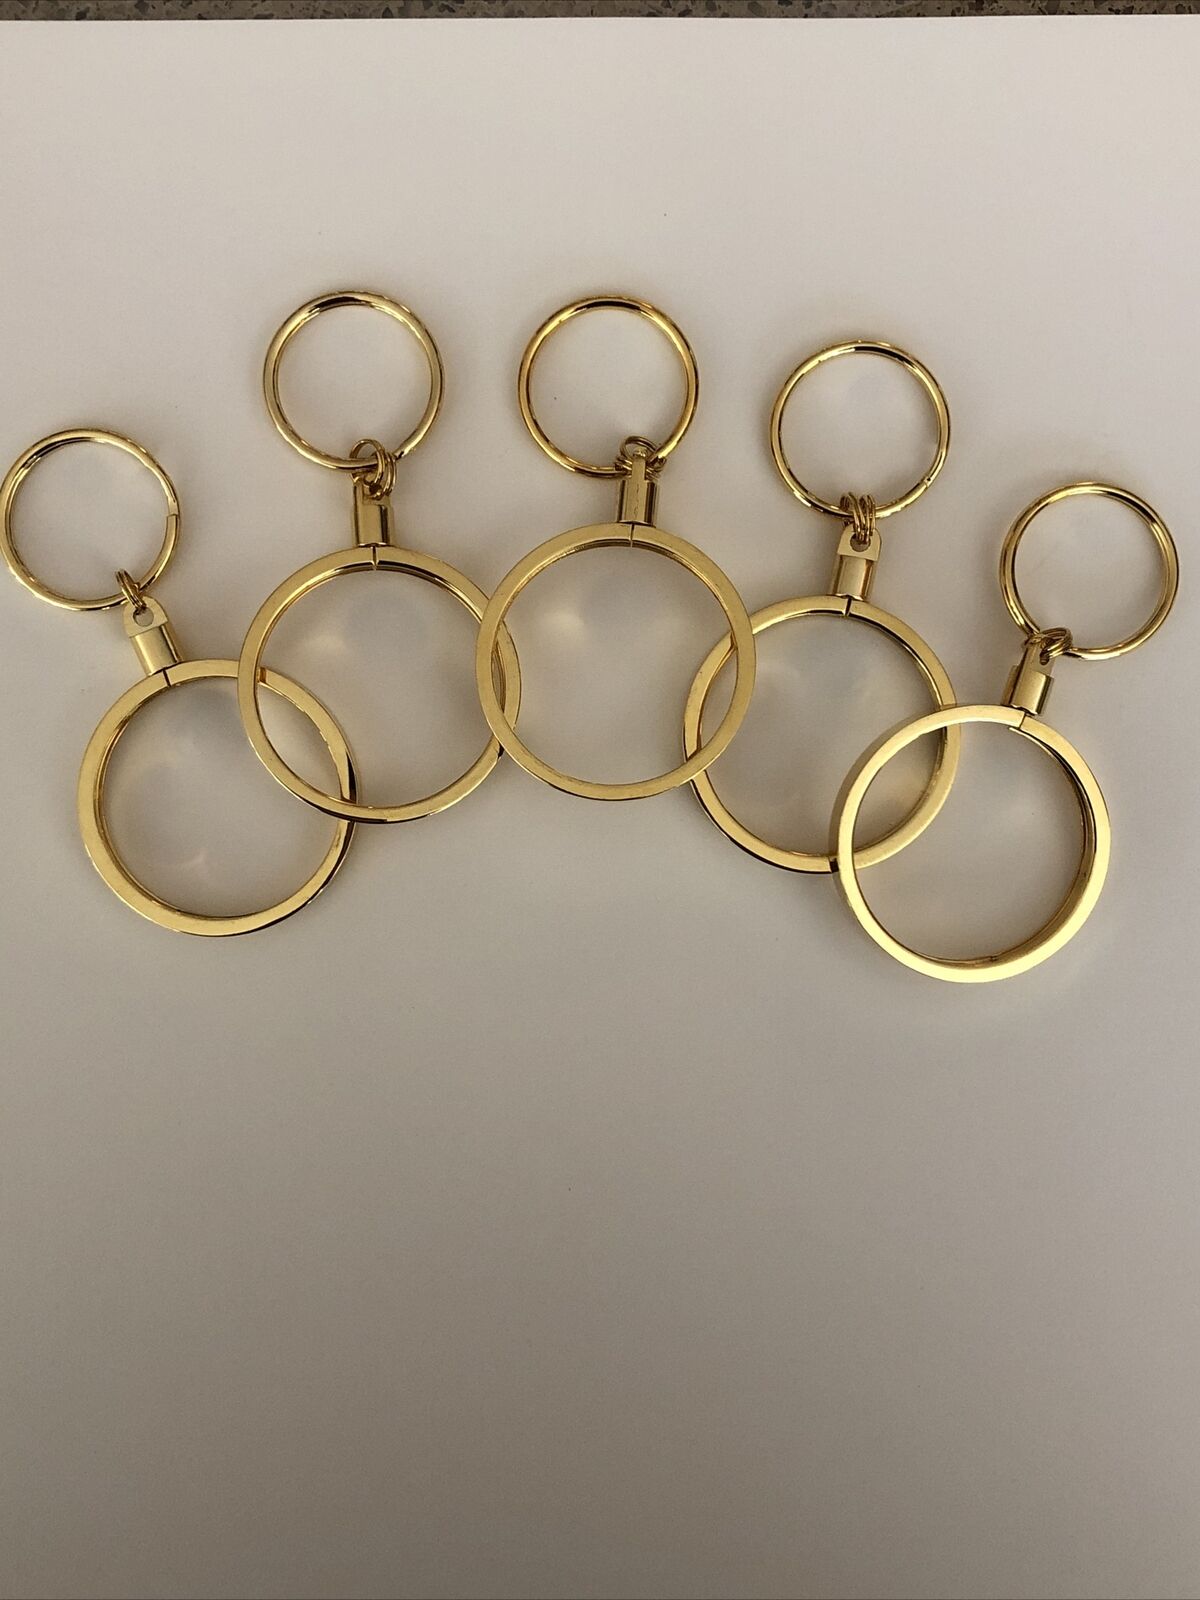 Set of 5 Gold Colored/Brass Poker Chip Key Ring Holder